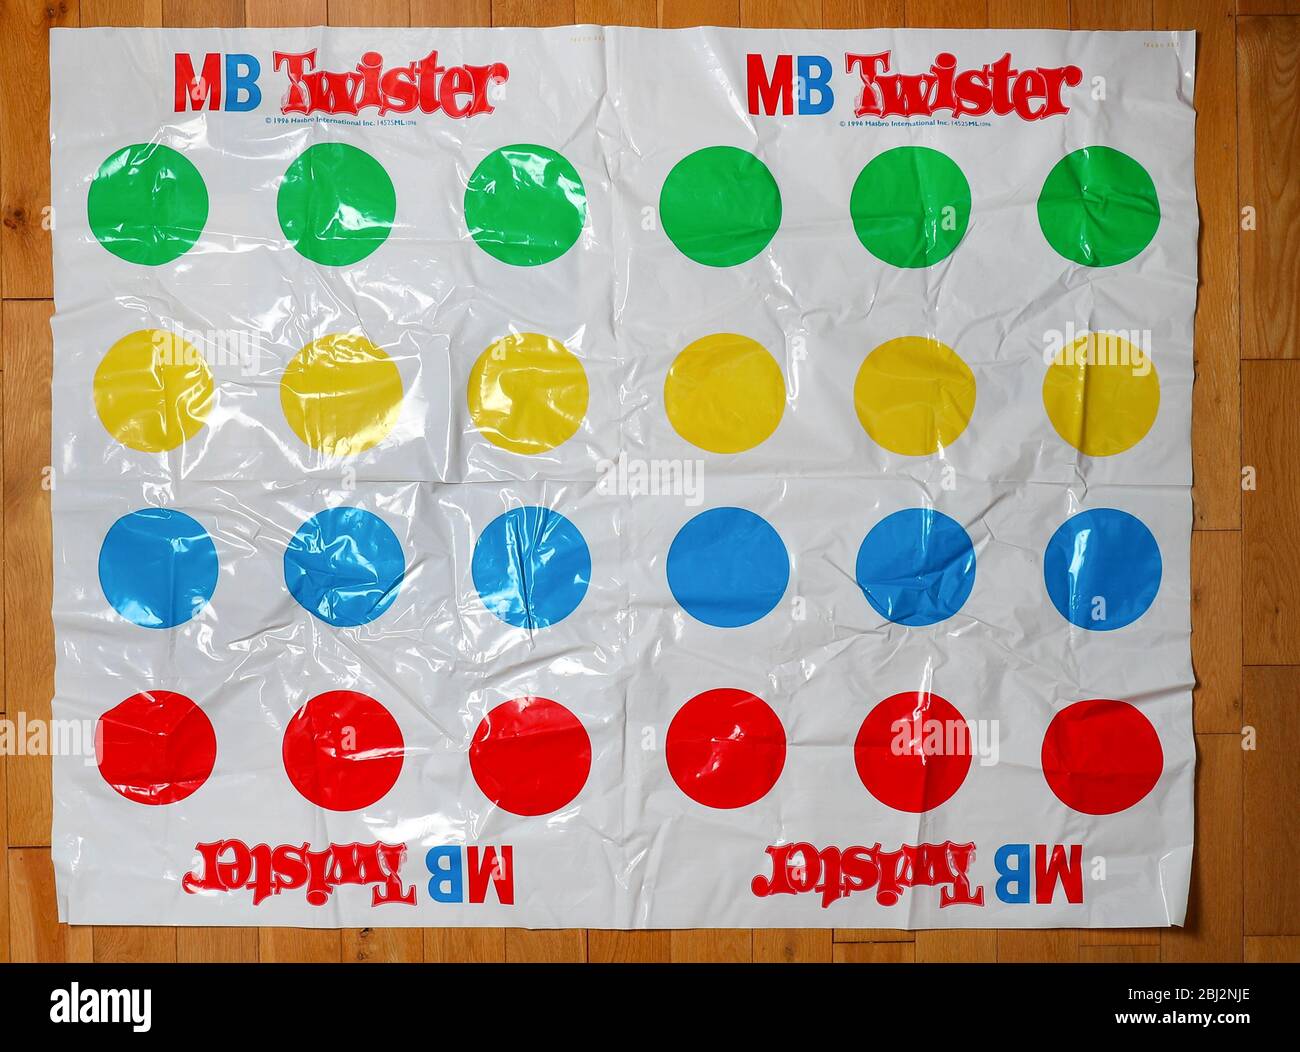 Tapis de jeu Twister Photo Stock - Alamy